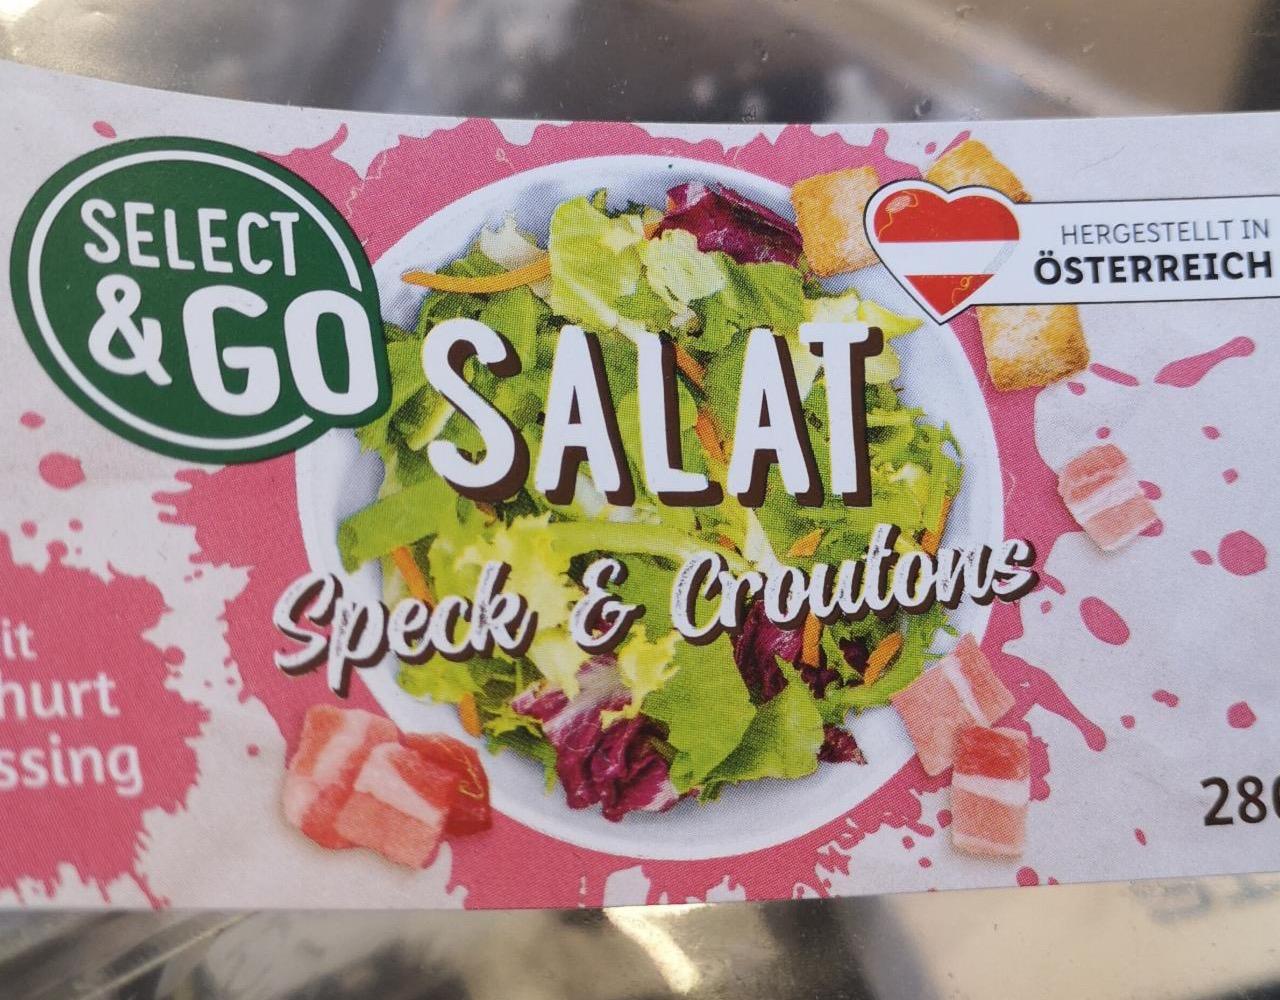 Képek - Salat Speck & croutons Select & Go